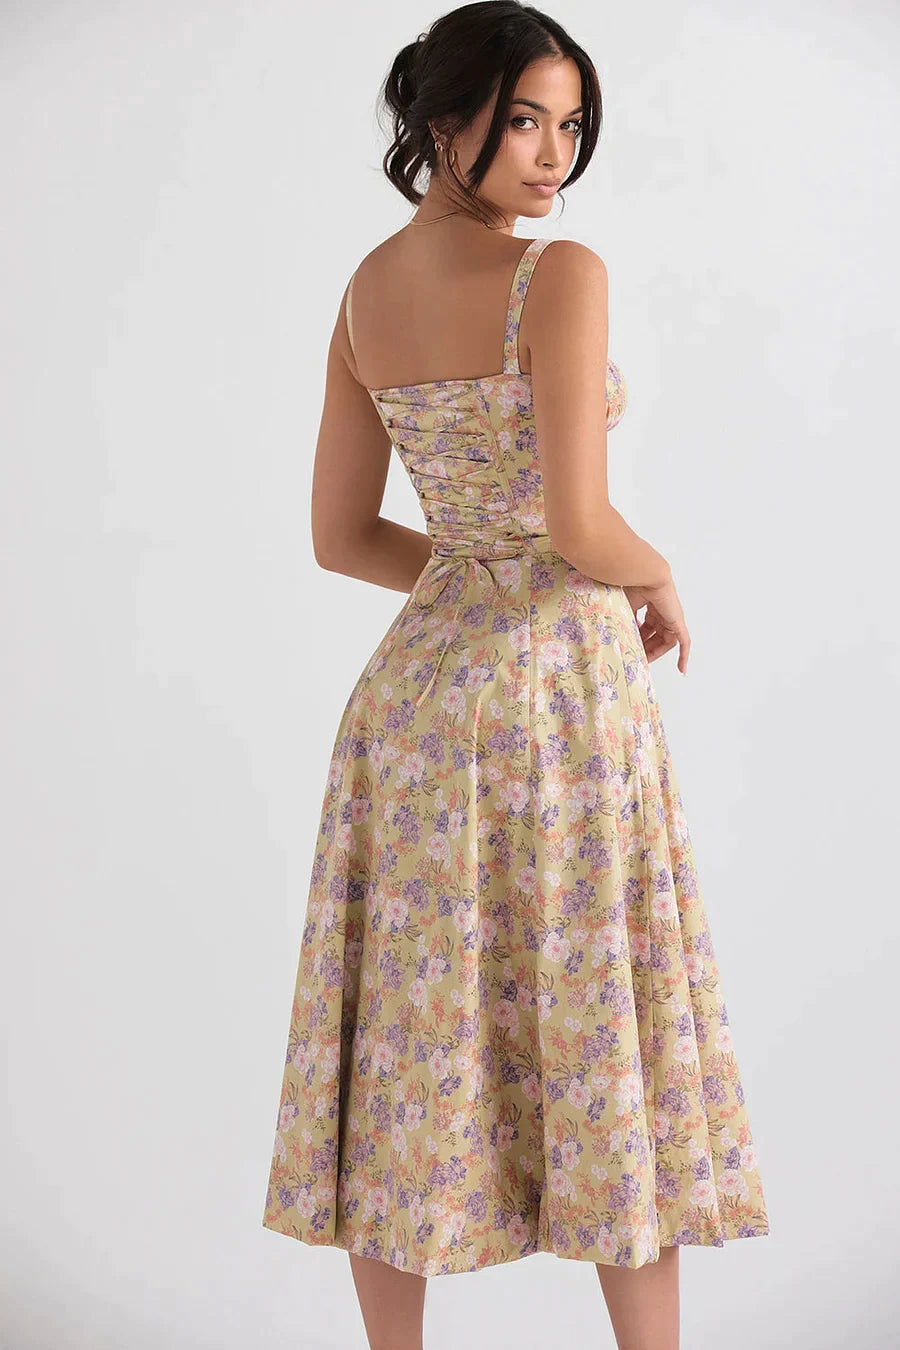 LegEase™ Floral Midriff Waist Shaper Dress